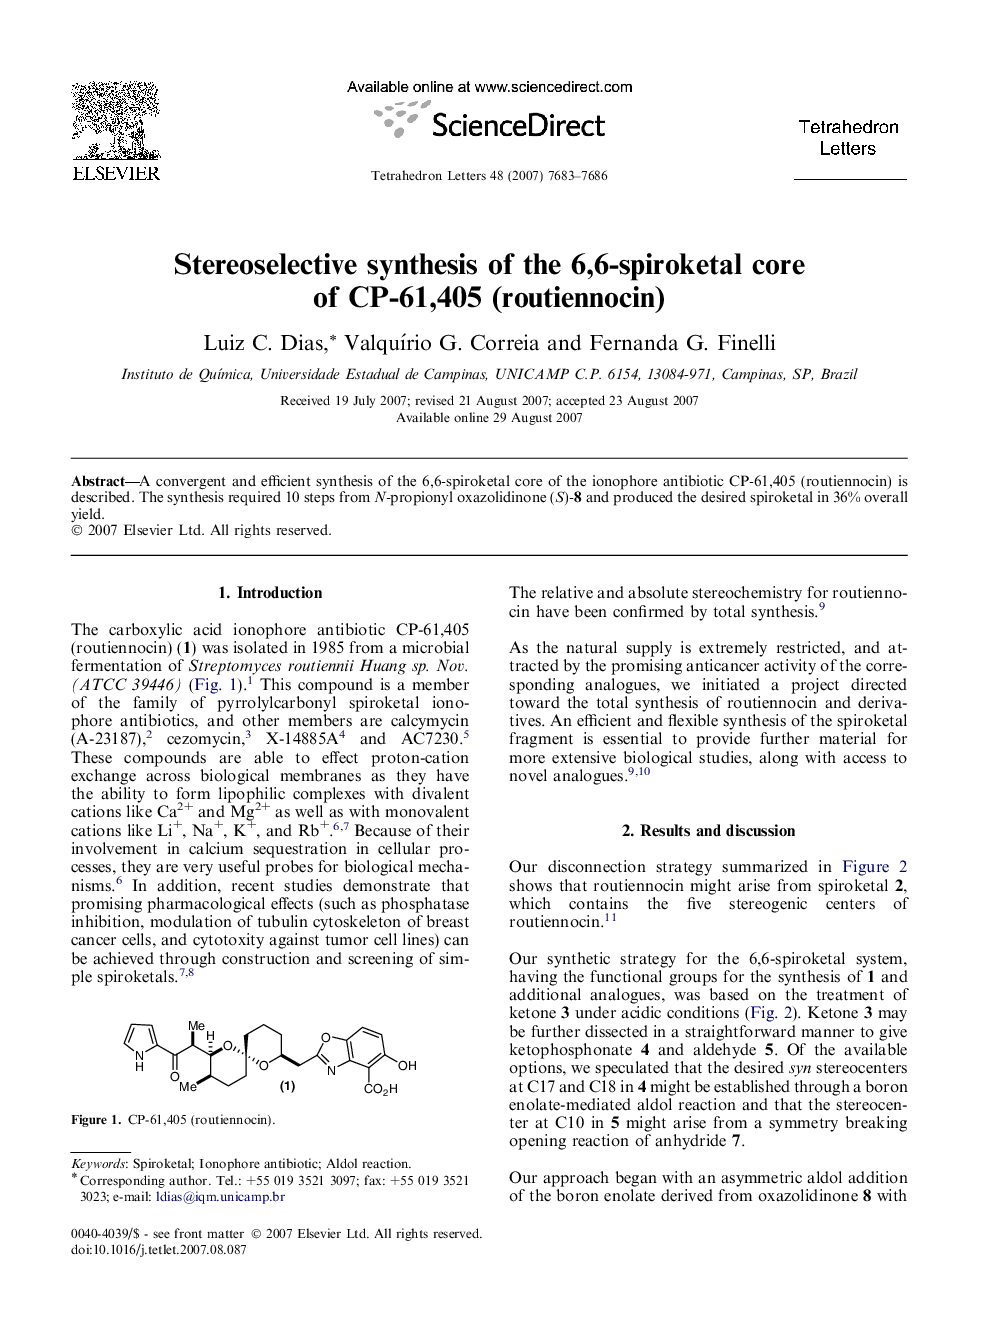 Stereoselective synthesis of the 6,6-spiroketal core of CP-61,405 (routiennocin)